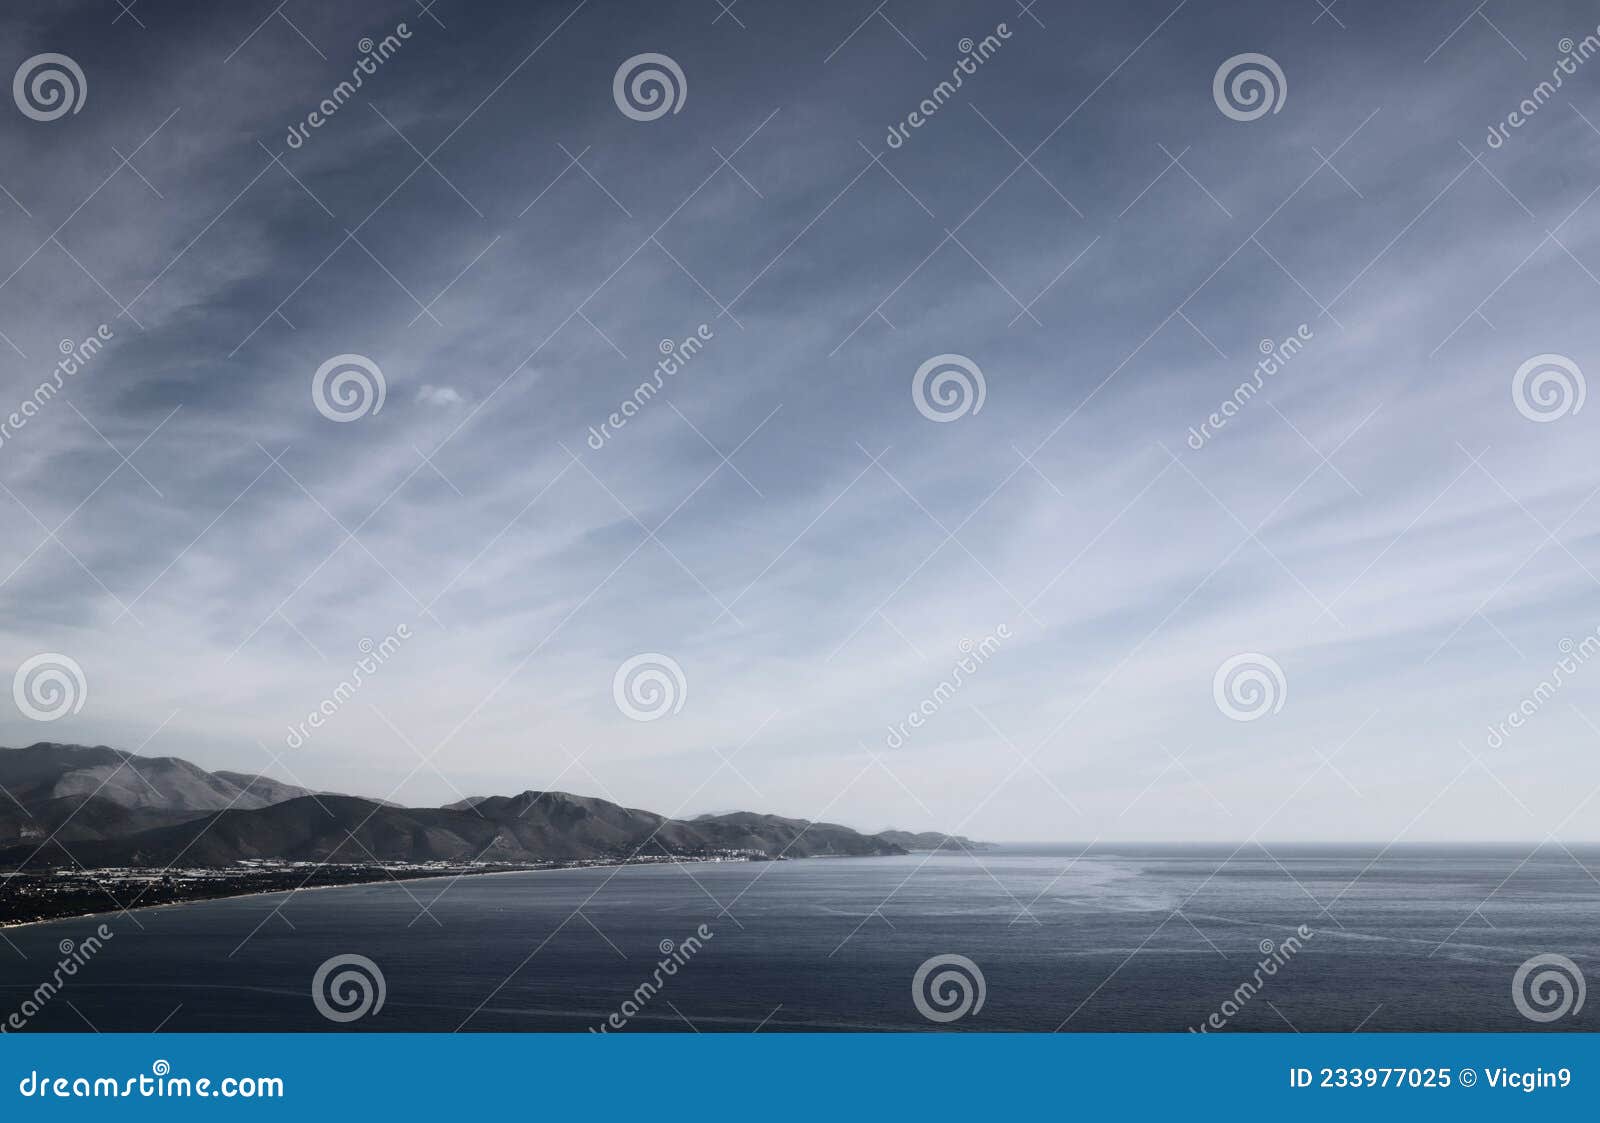 sea landscape in the tyrrhenian sea -italy